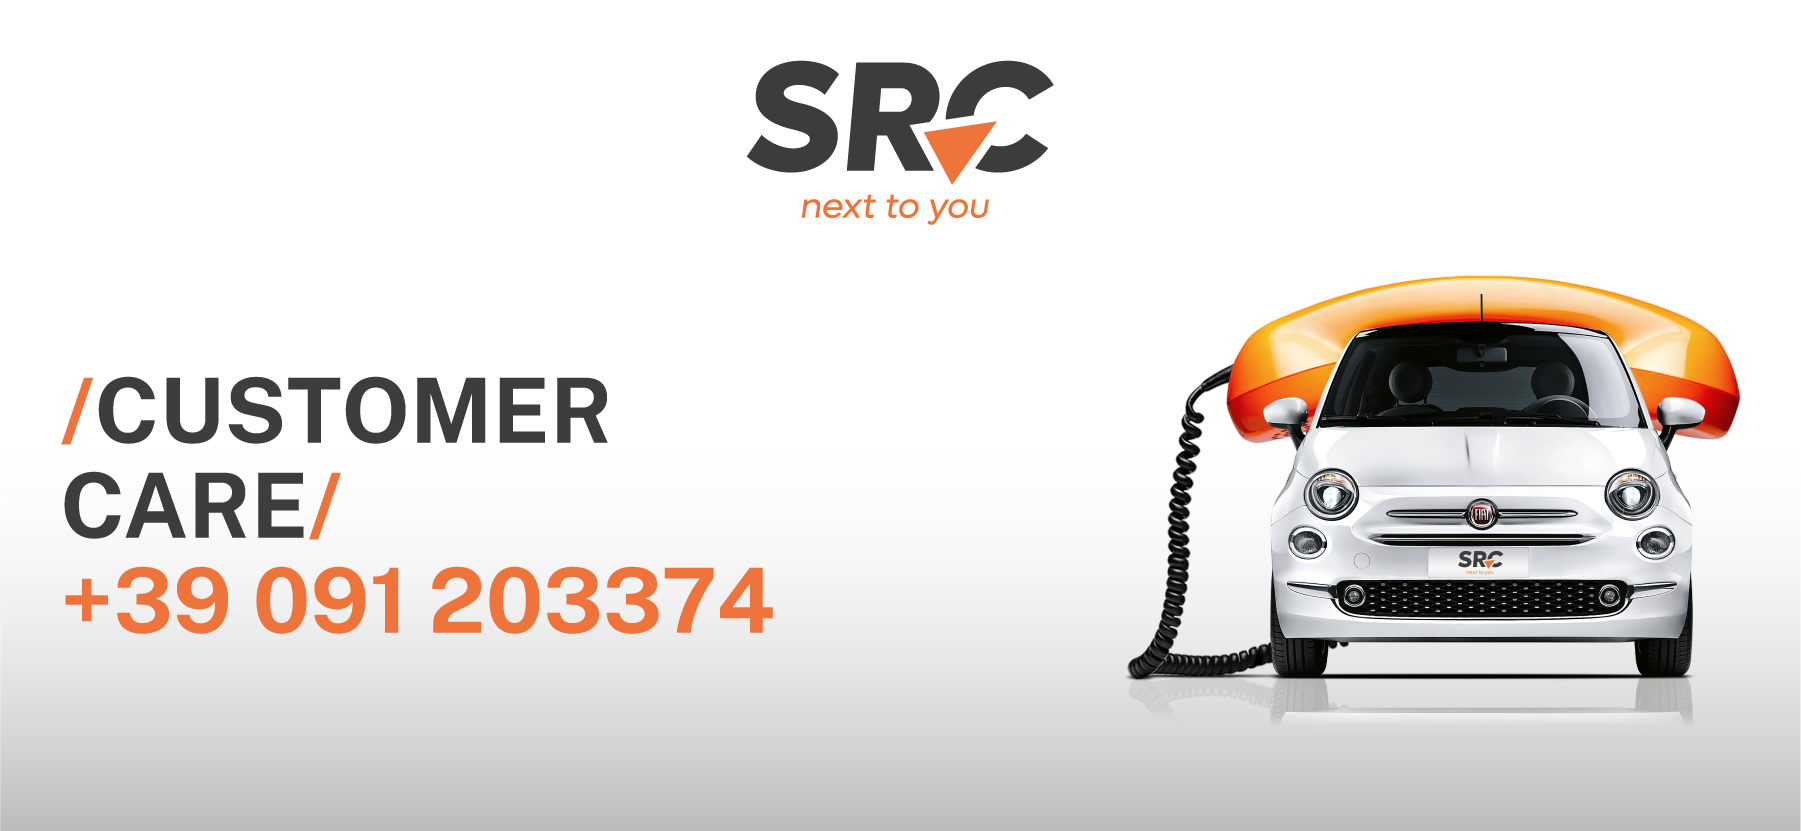 SRC_Customer care